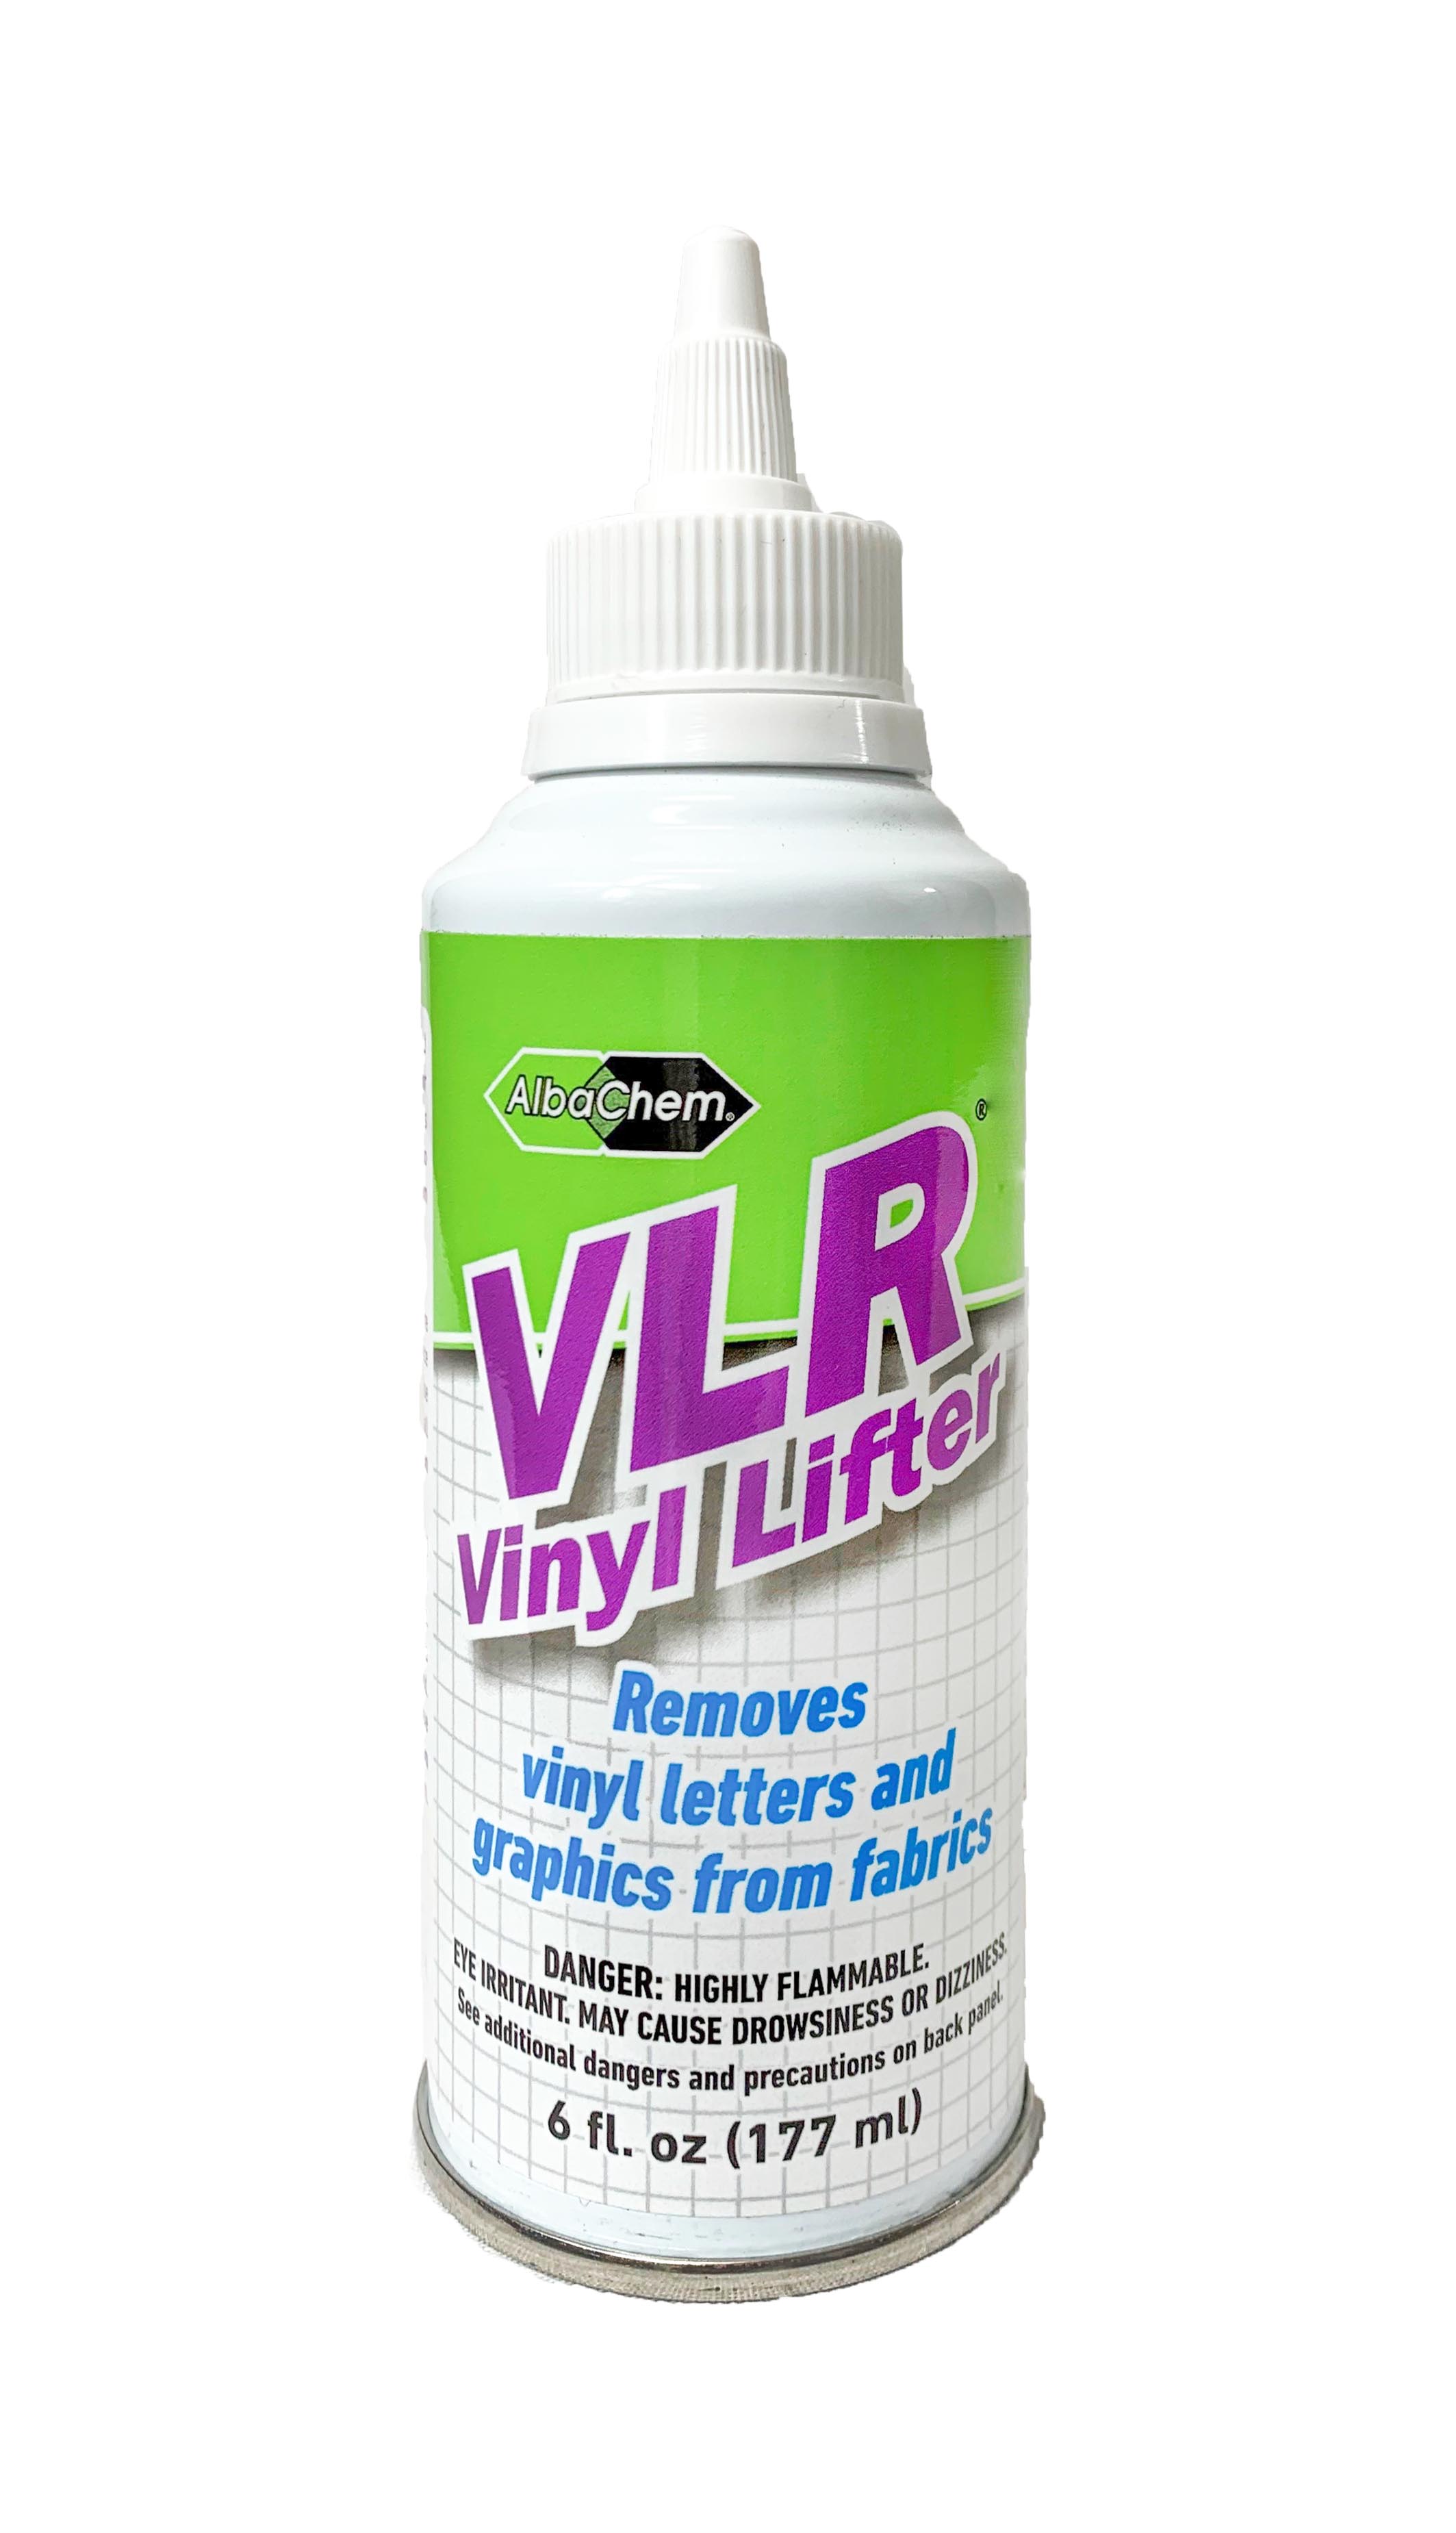 albchem vlr vinyl lifter liquid bottle for removing vinyl letters and graphics from fabrics